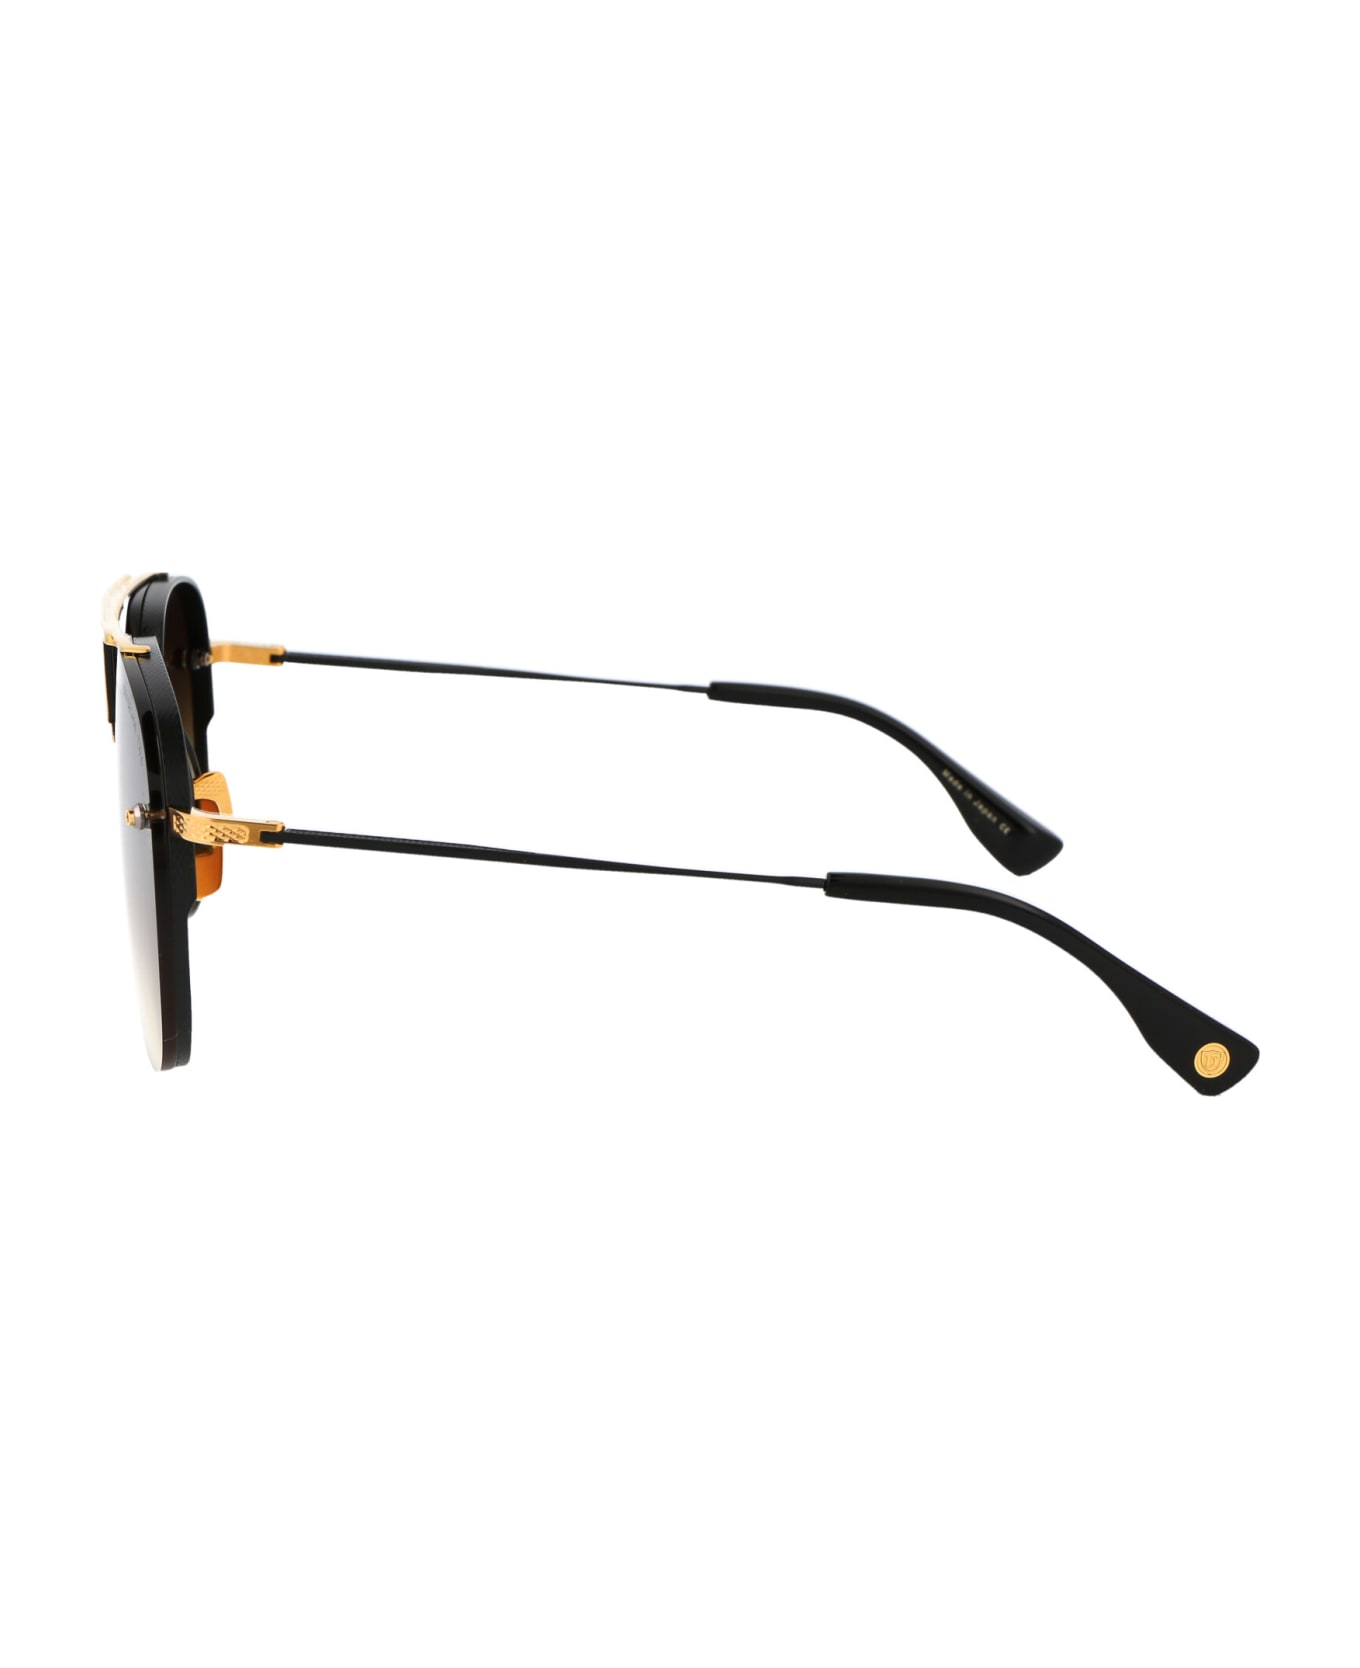 Dita Decade-two Sunglasses - Matte Black-18k Gold-  AR